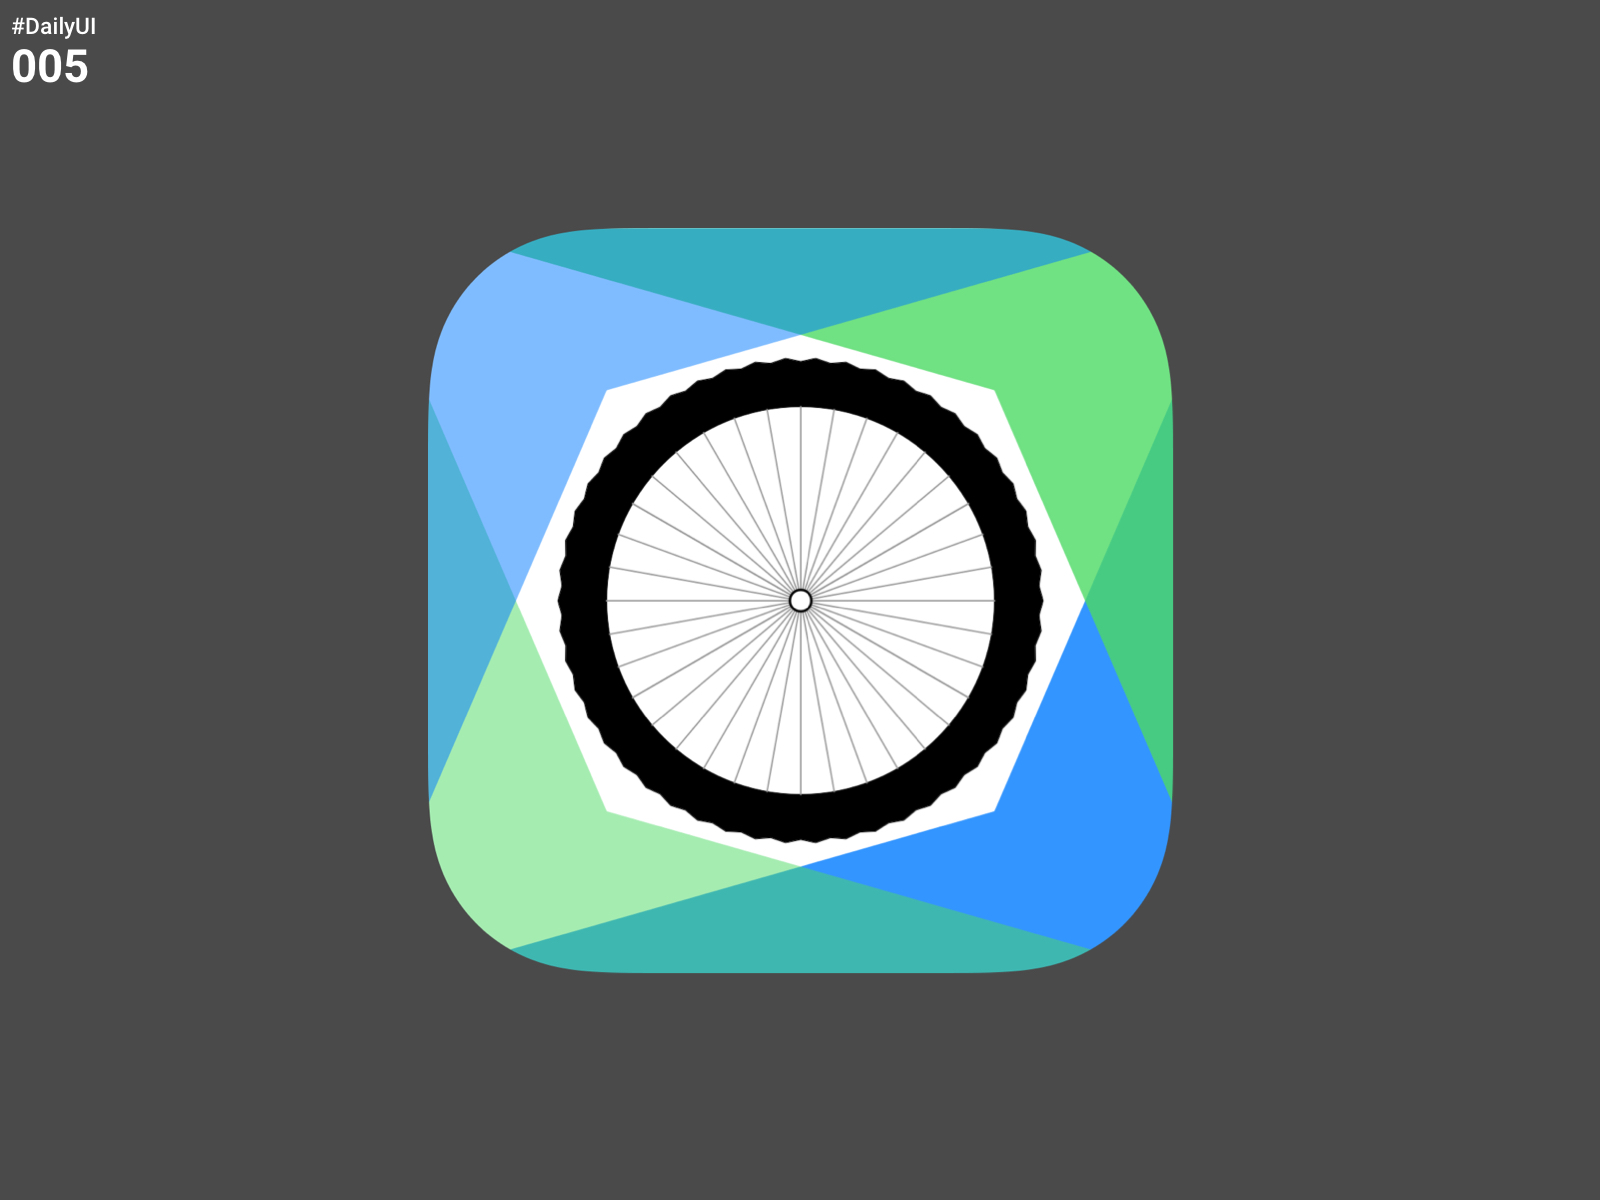 DailyUI Challenge 005 - Design an App Icon